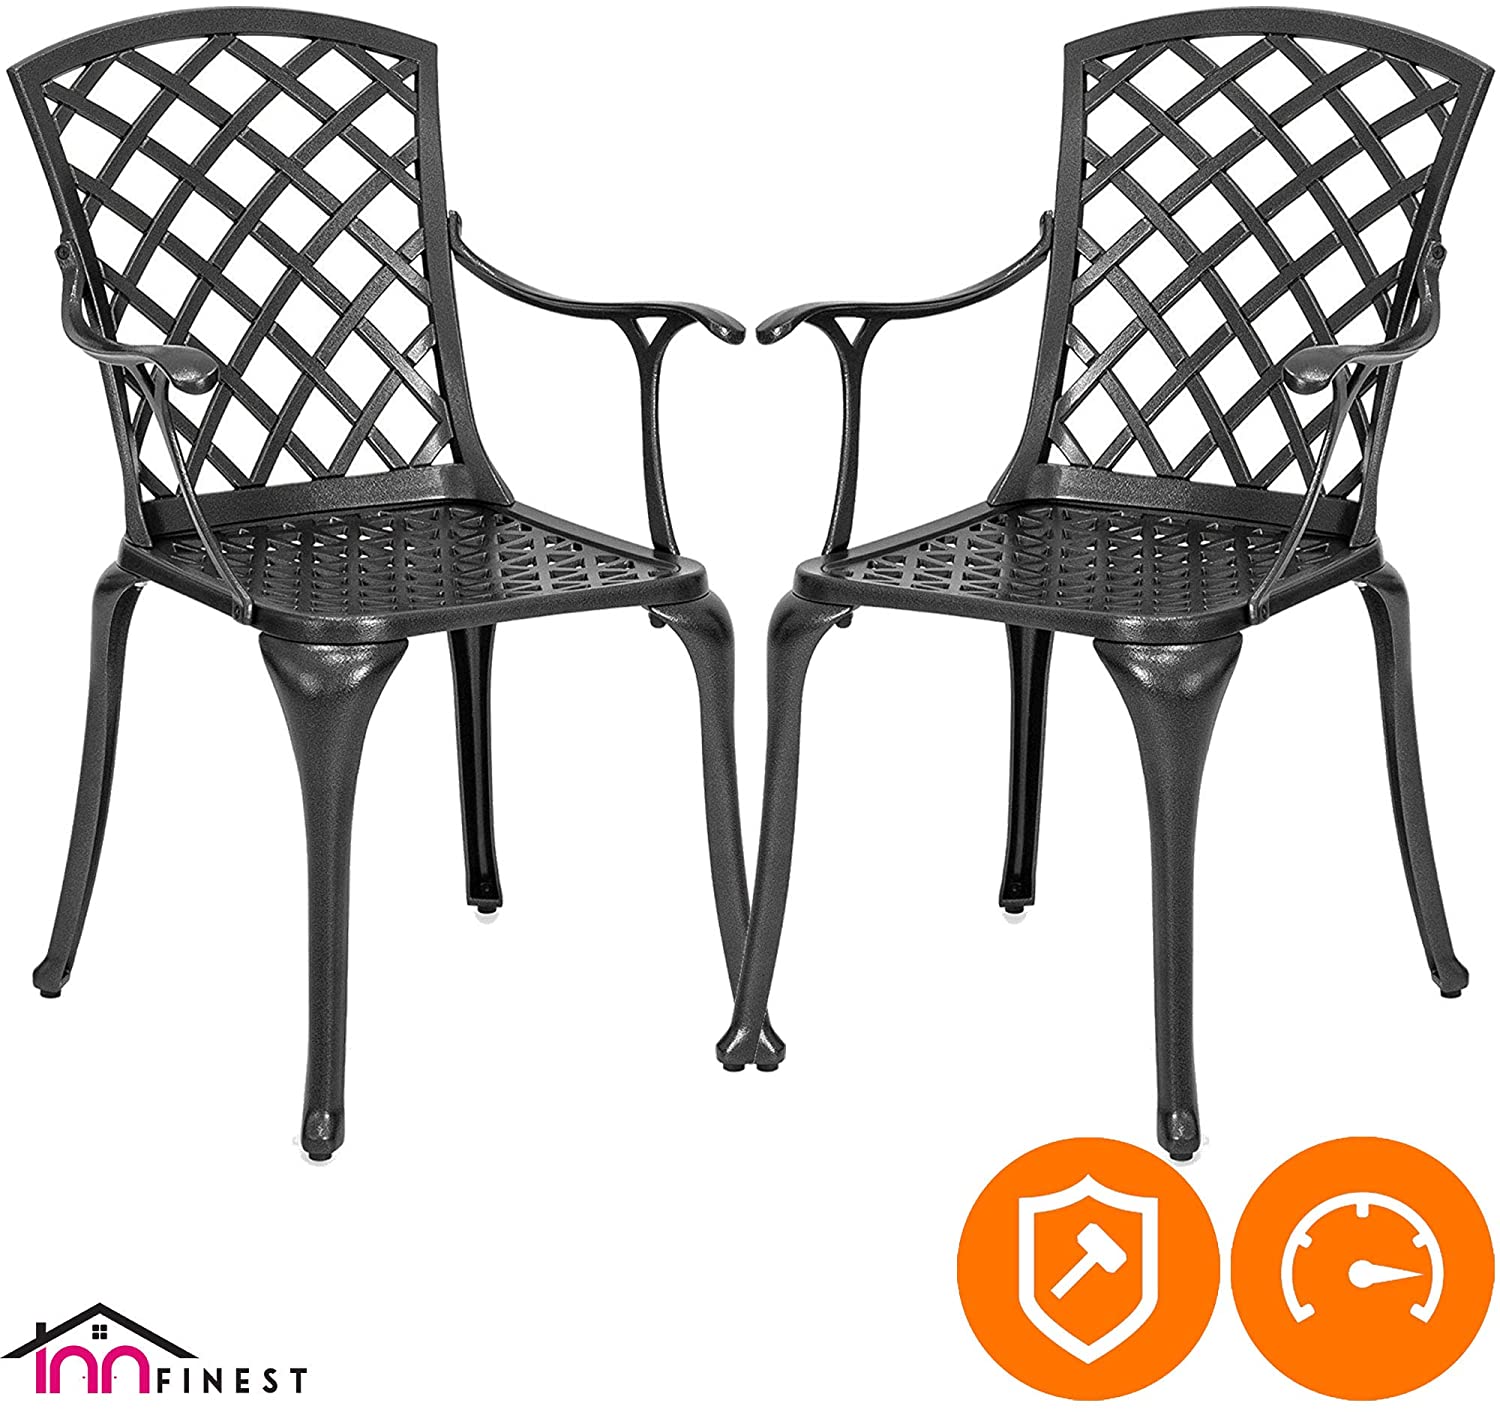 2-Piece Patio Bistro Dining Chair Set - Cast Aluminum Lattice Weave Design - Ergonomic Rust Resistant - for Outdoor Furniture Patio Deck Garden - Optional Add-on Table for 5 or 7 Piece Set (Black)